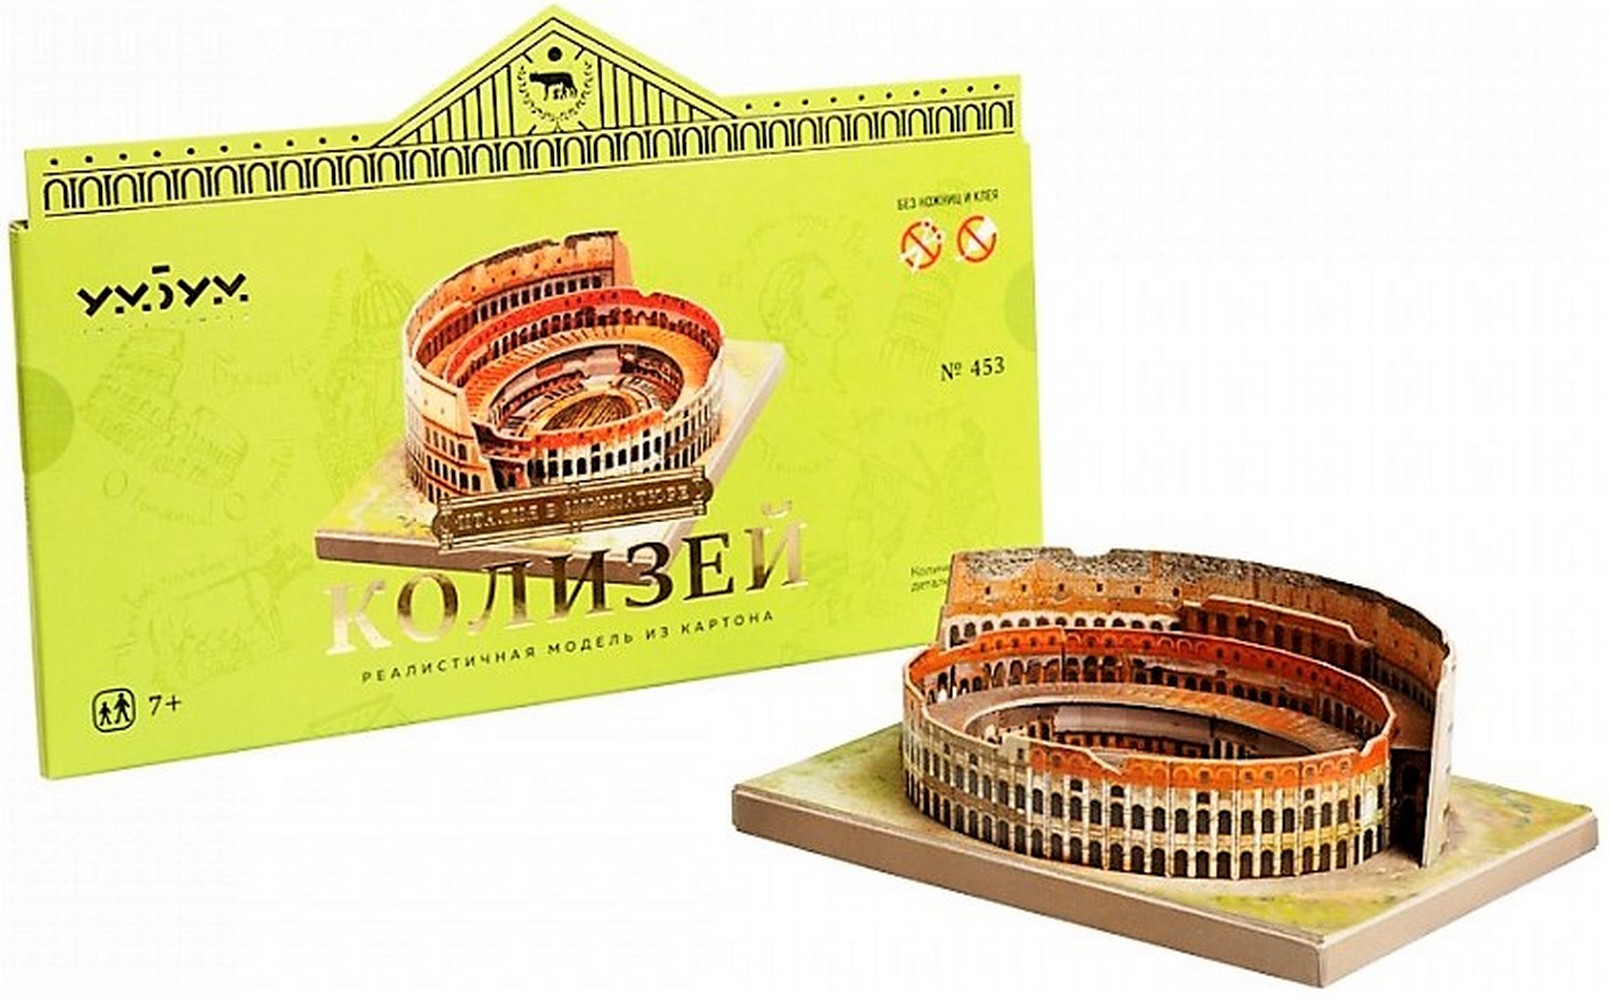 3d Puzzle KARTONMODELLBAU Papiermodell Geschenk Idee Spielzeug Kolosseum Colosseo Rom